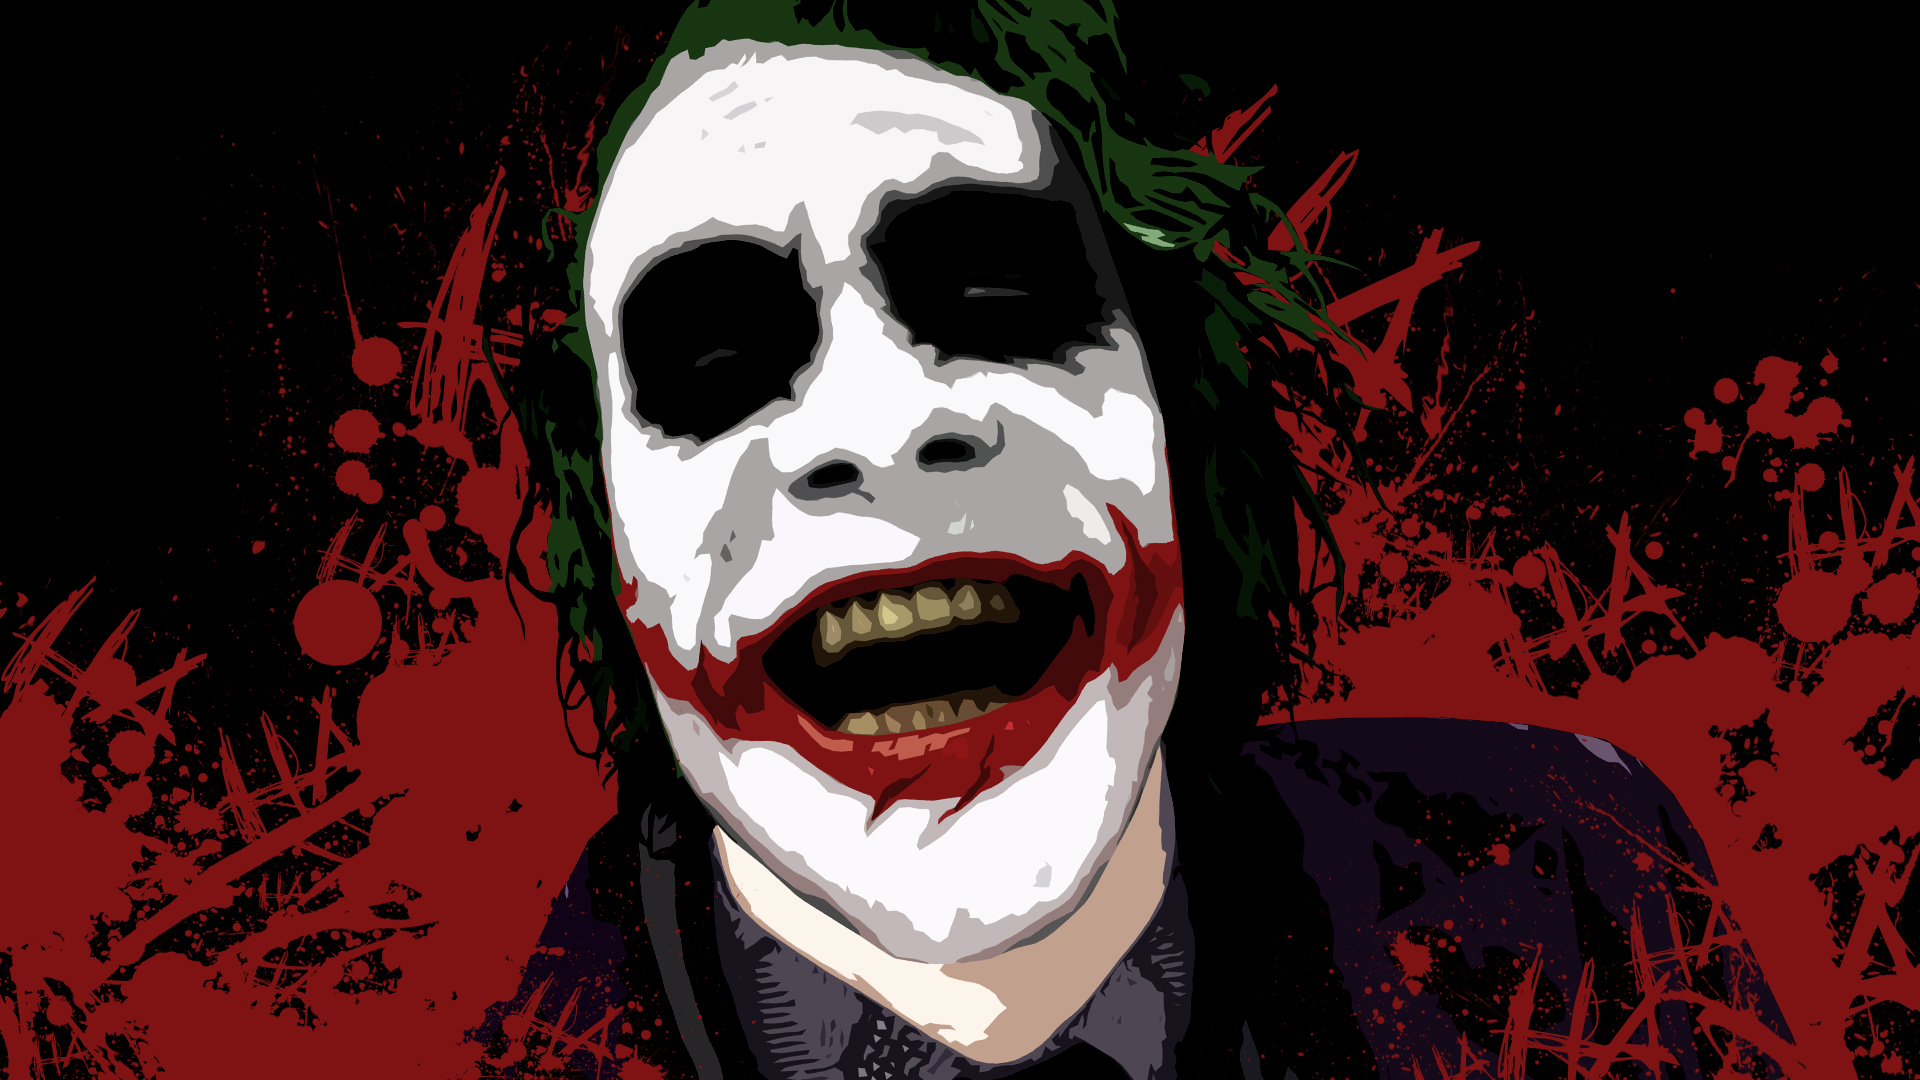 Free download The Joker Wallpaper Picture Image [1920x1080] for your Desktop, Mobile & Tablet. Explore Joker Batman Haunting Wallpaper. Joker Batman Haunting Wallpaper, Batman Joker Wallpaper, Batman Joker Wallpaper